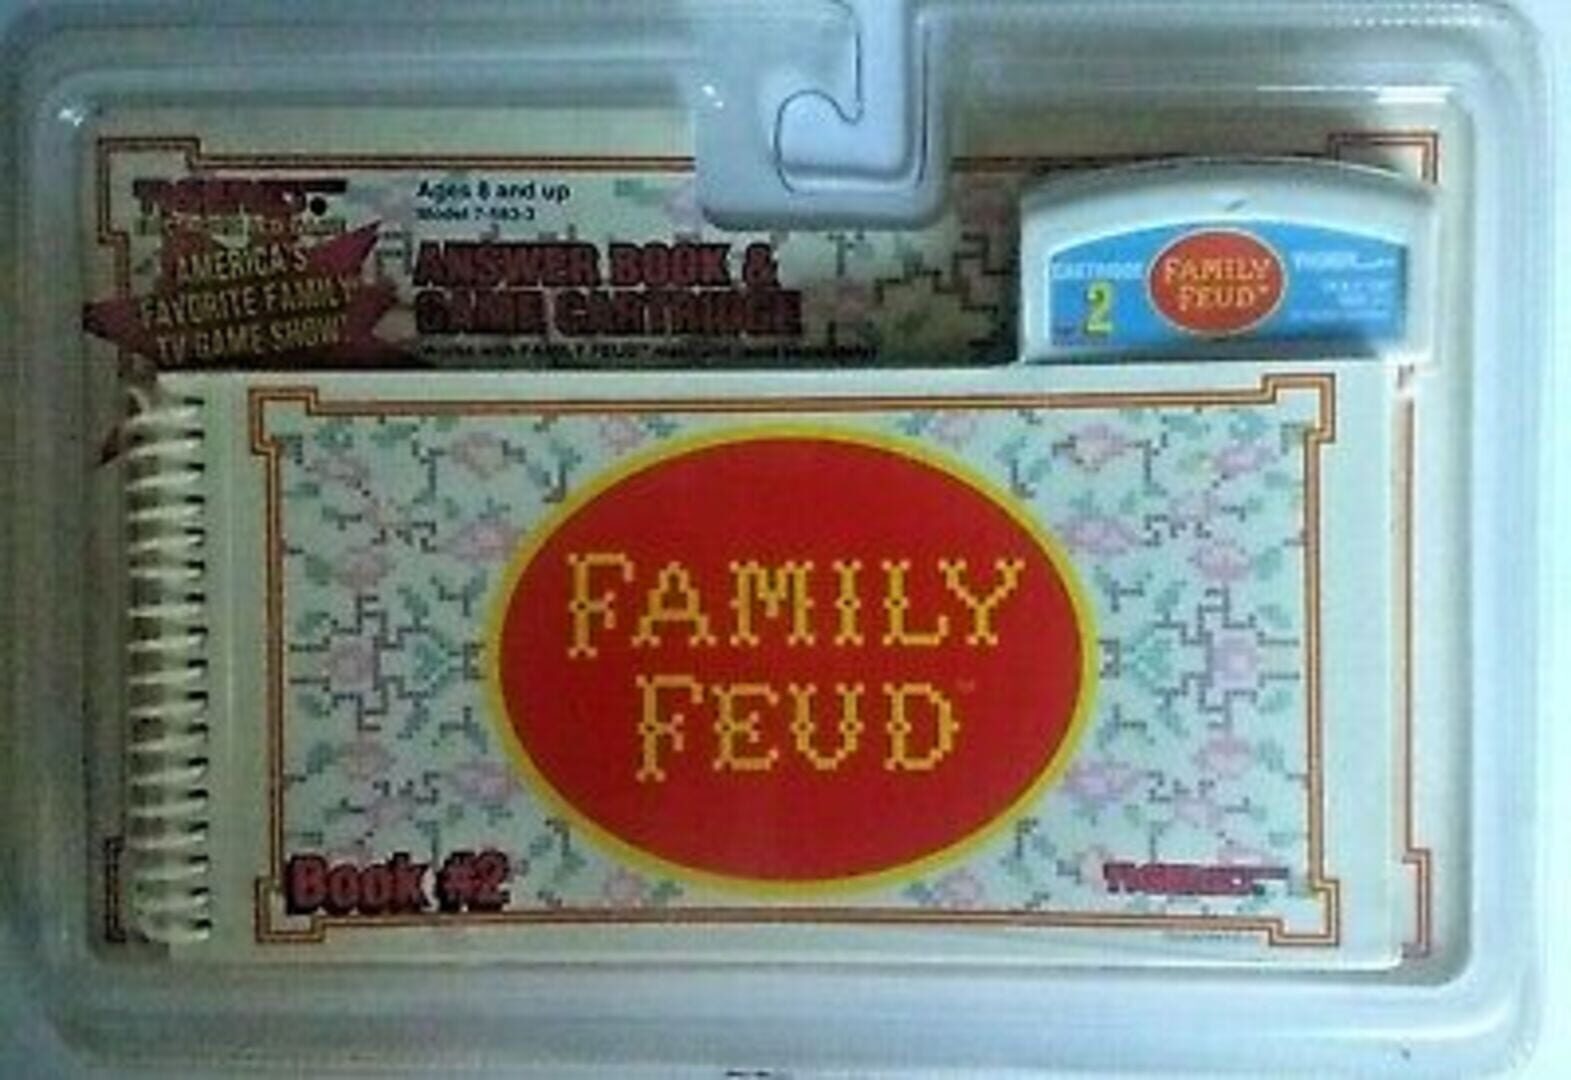 Family Feud Cartridge #2